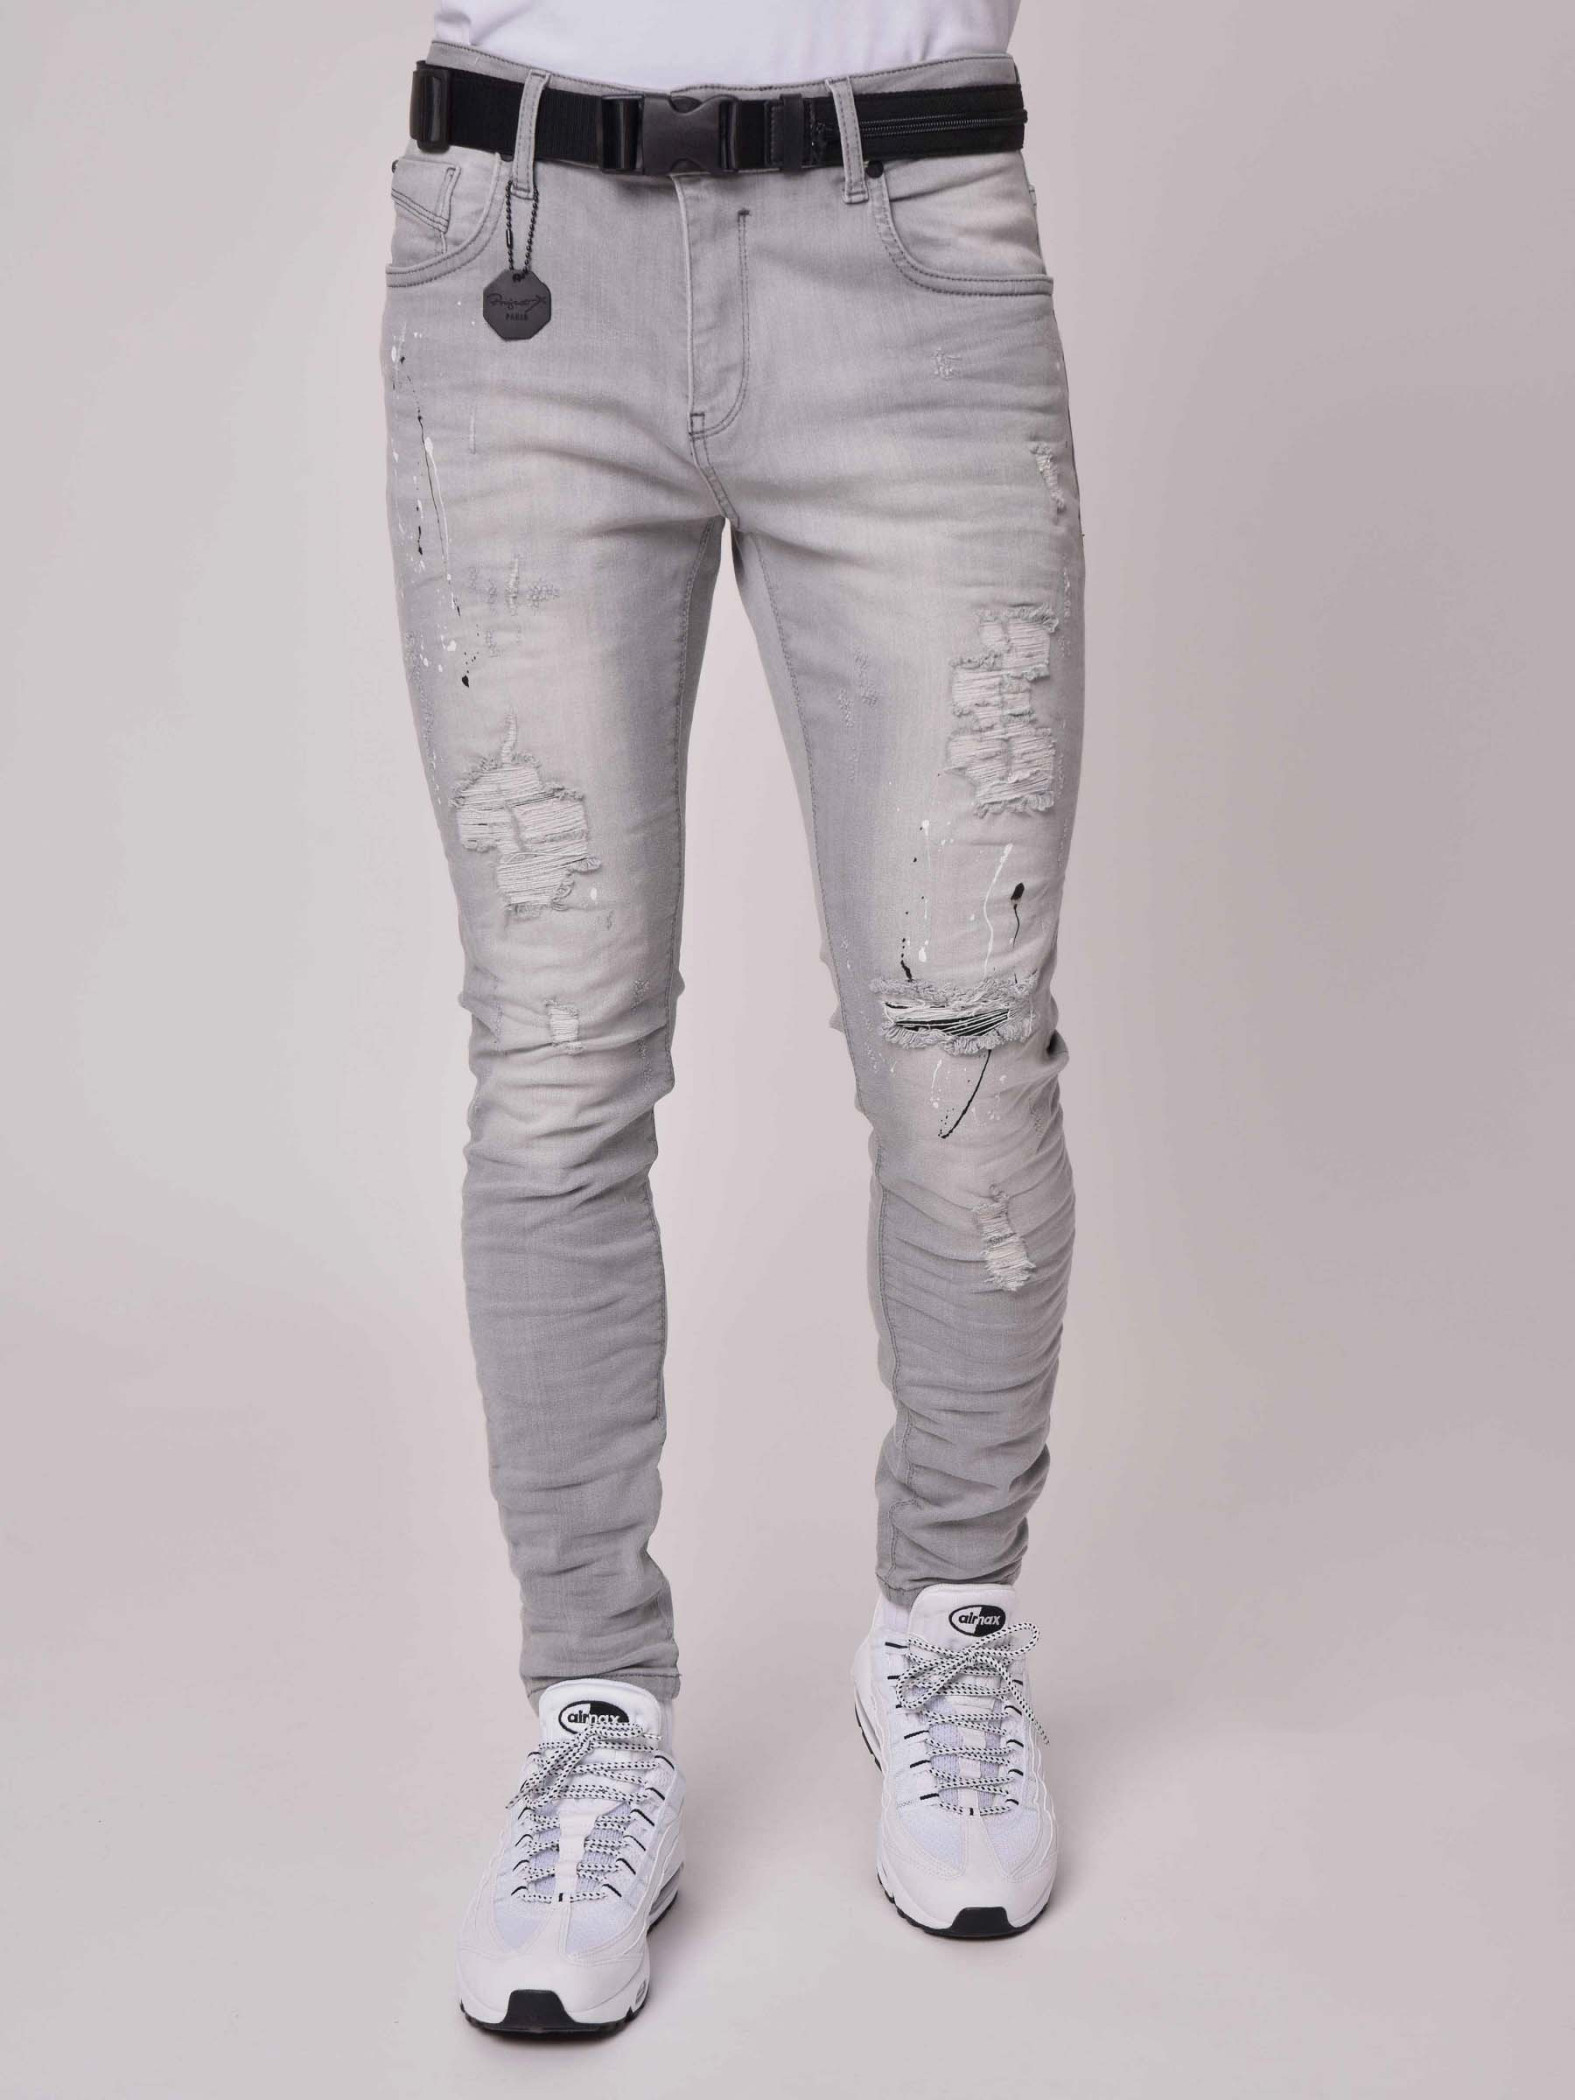 mens jeans with paint splatter